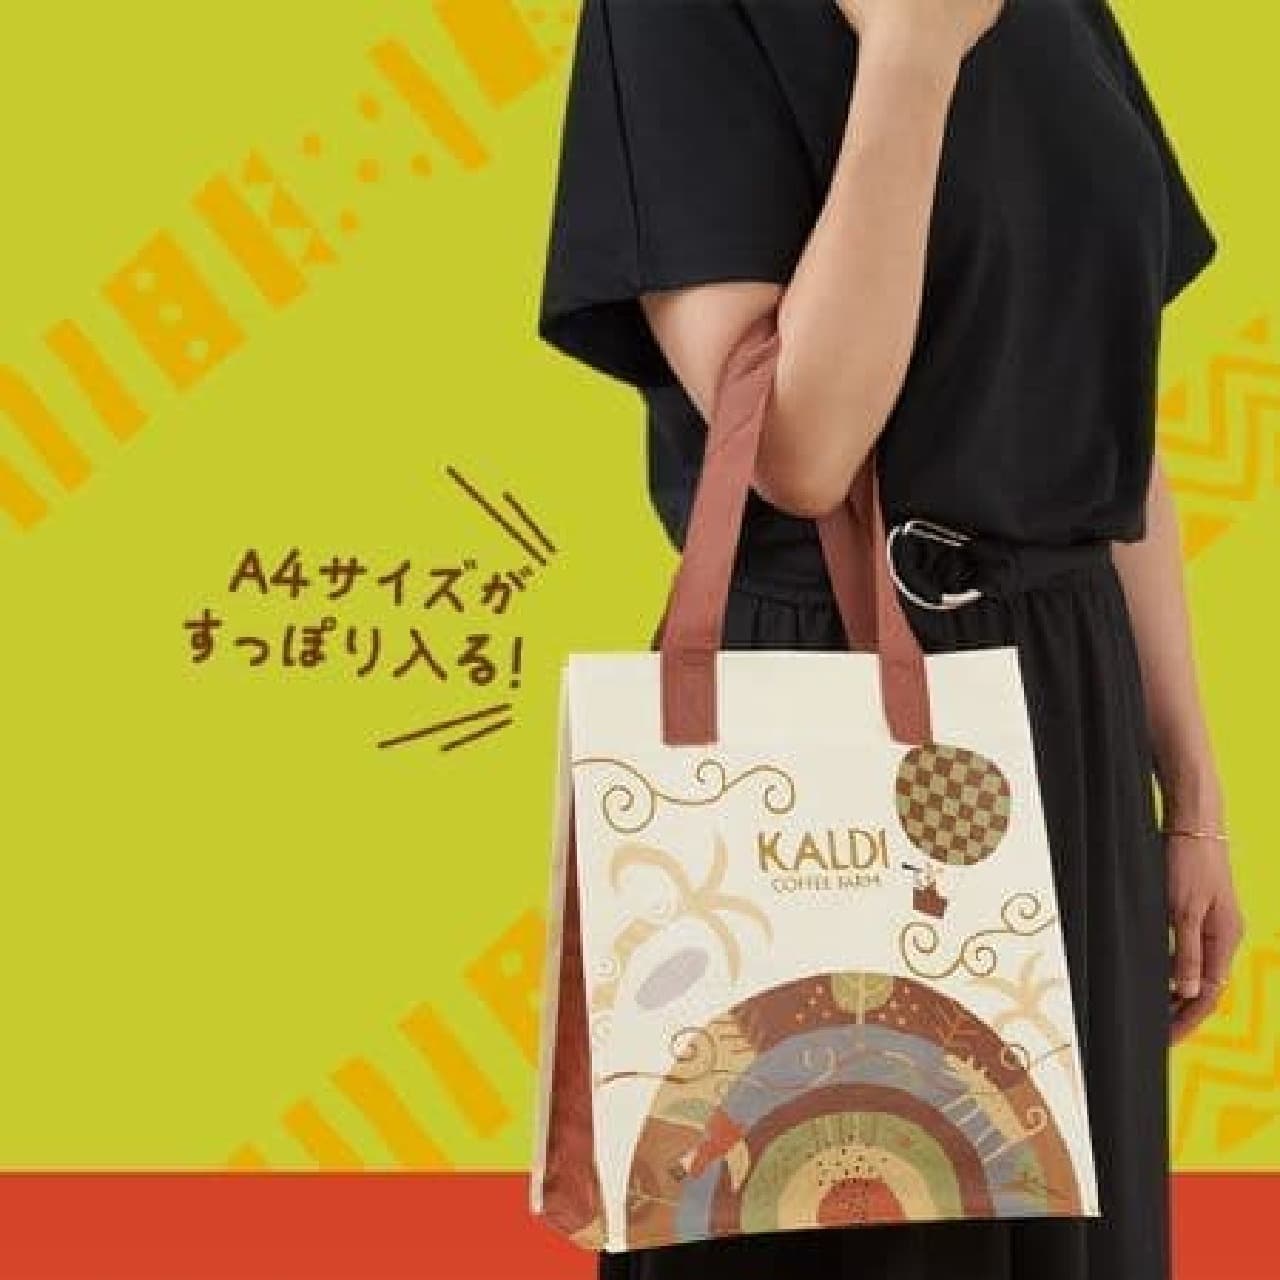 Limited quantity of "original eco bag earth pattern" on KALDI